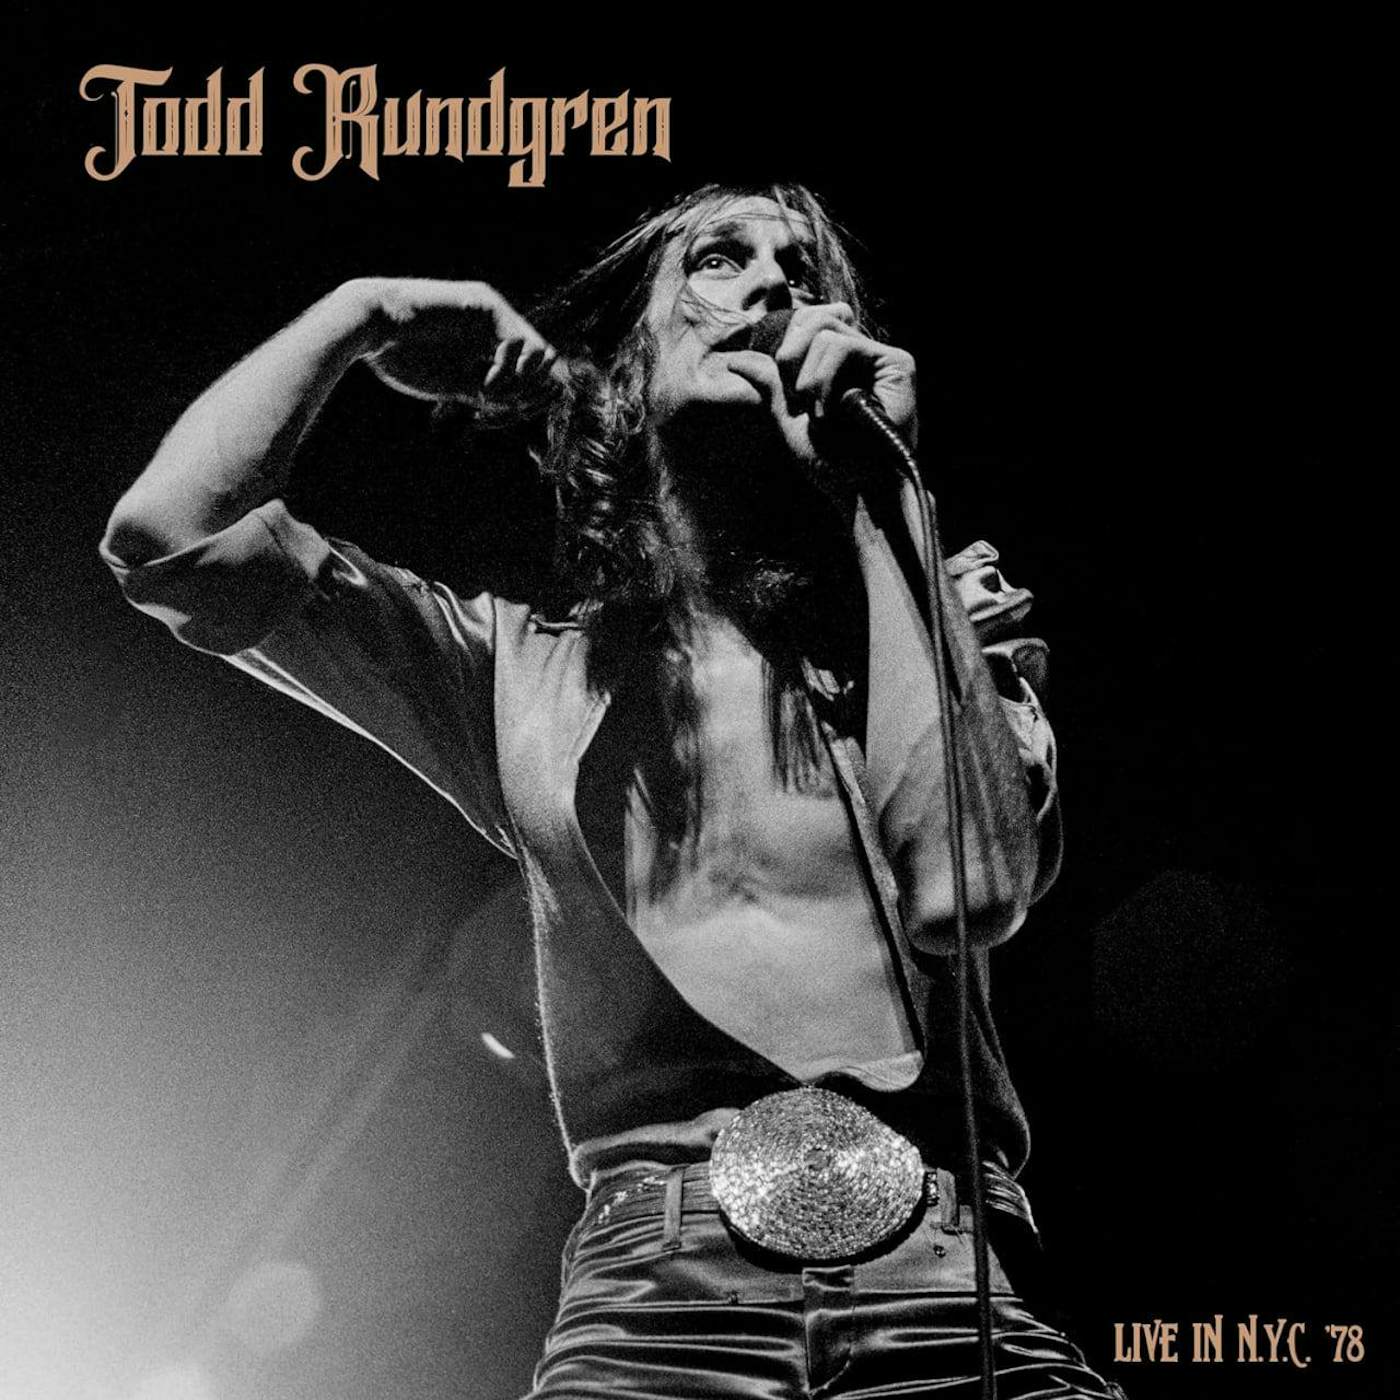 Todd Rundgren Live in NYC '78 (Gold) Vinyl Record